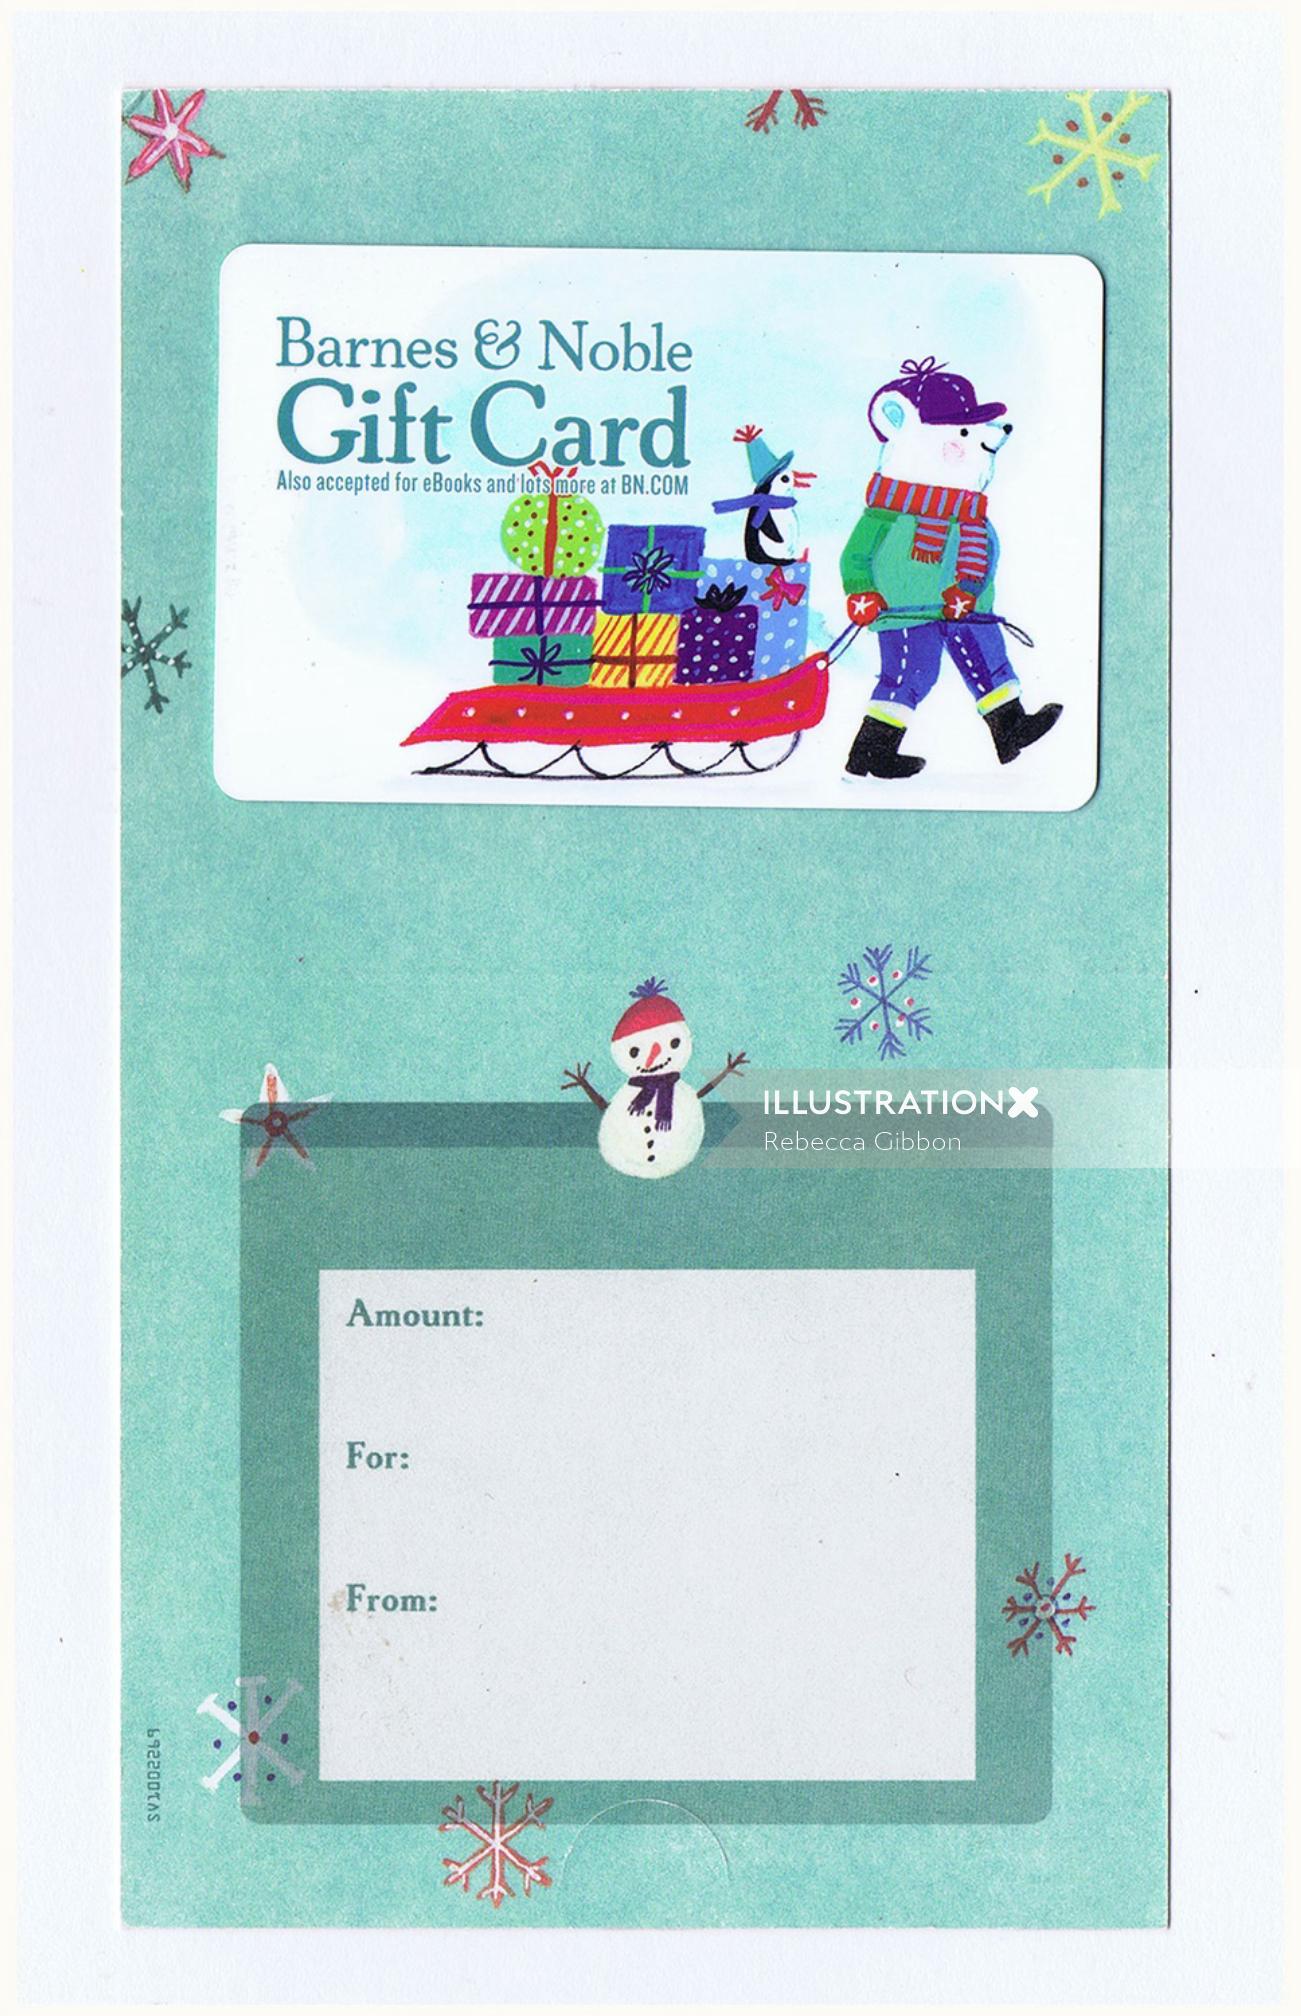 Illustration of Christmas gift card for Barnes & Noble